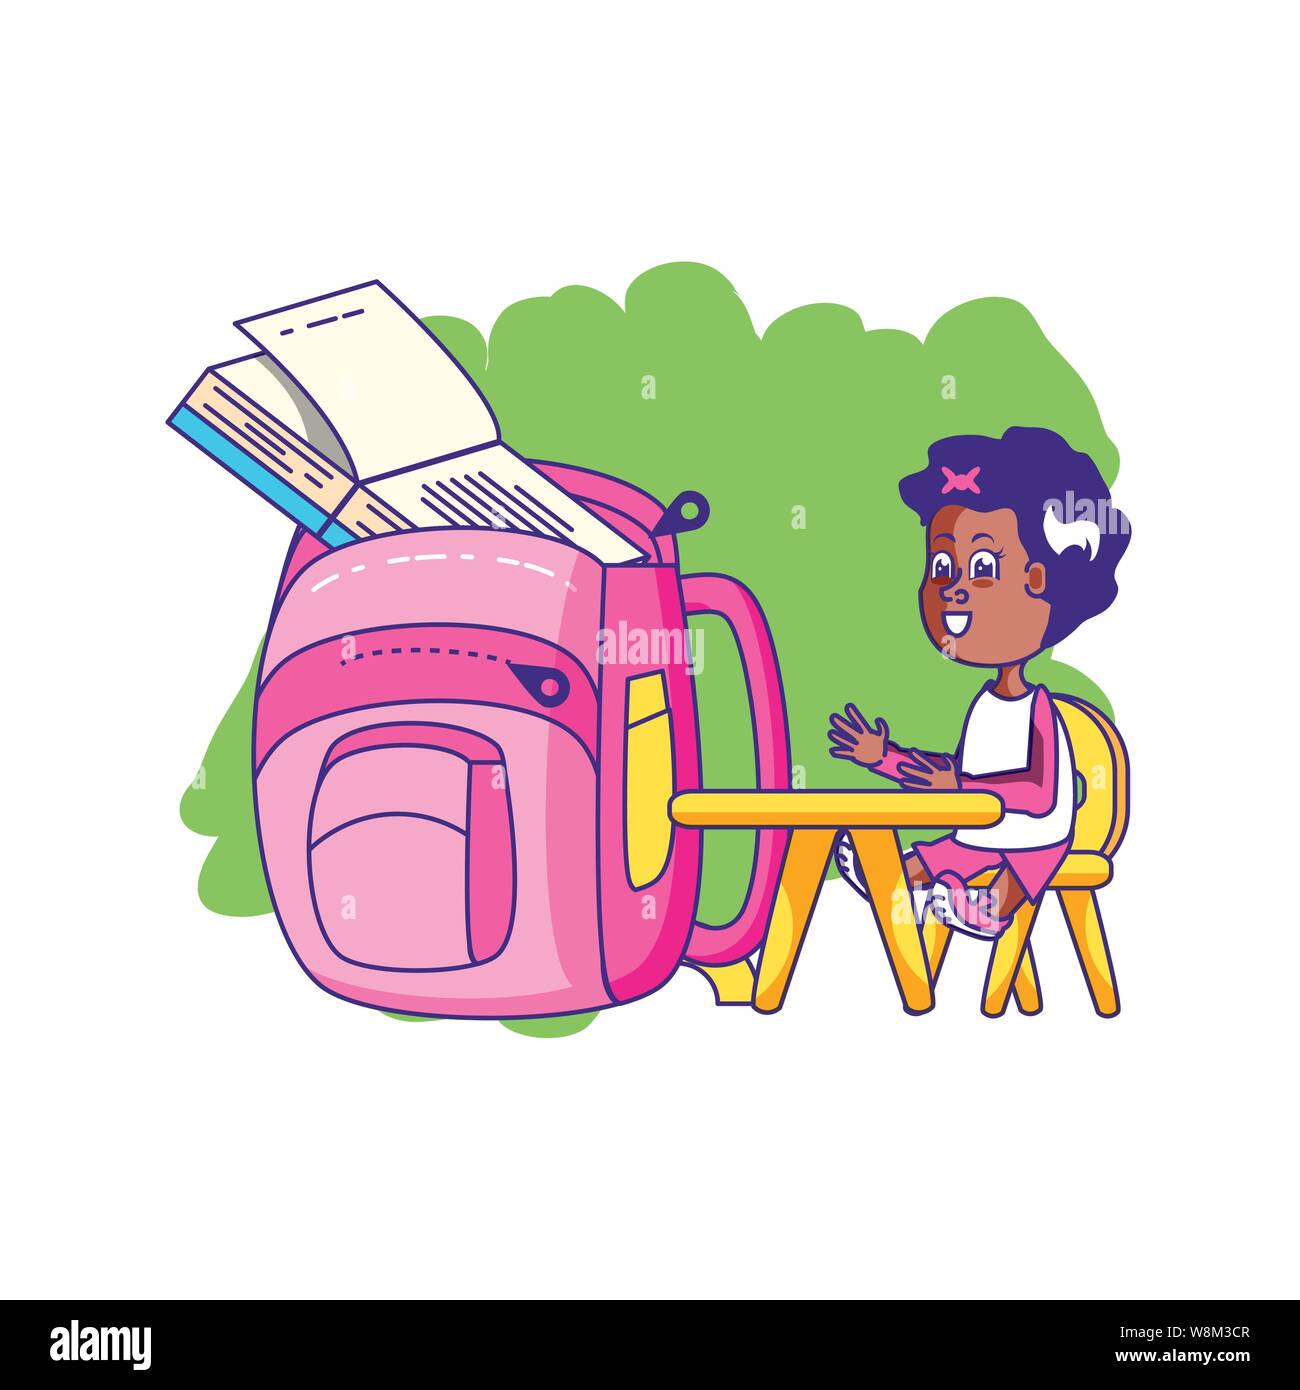 cute little student girl in desk with school bag vector